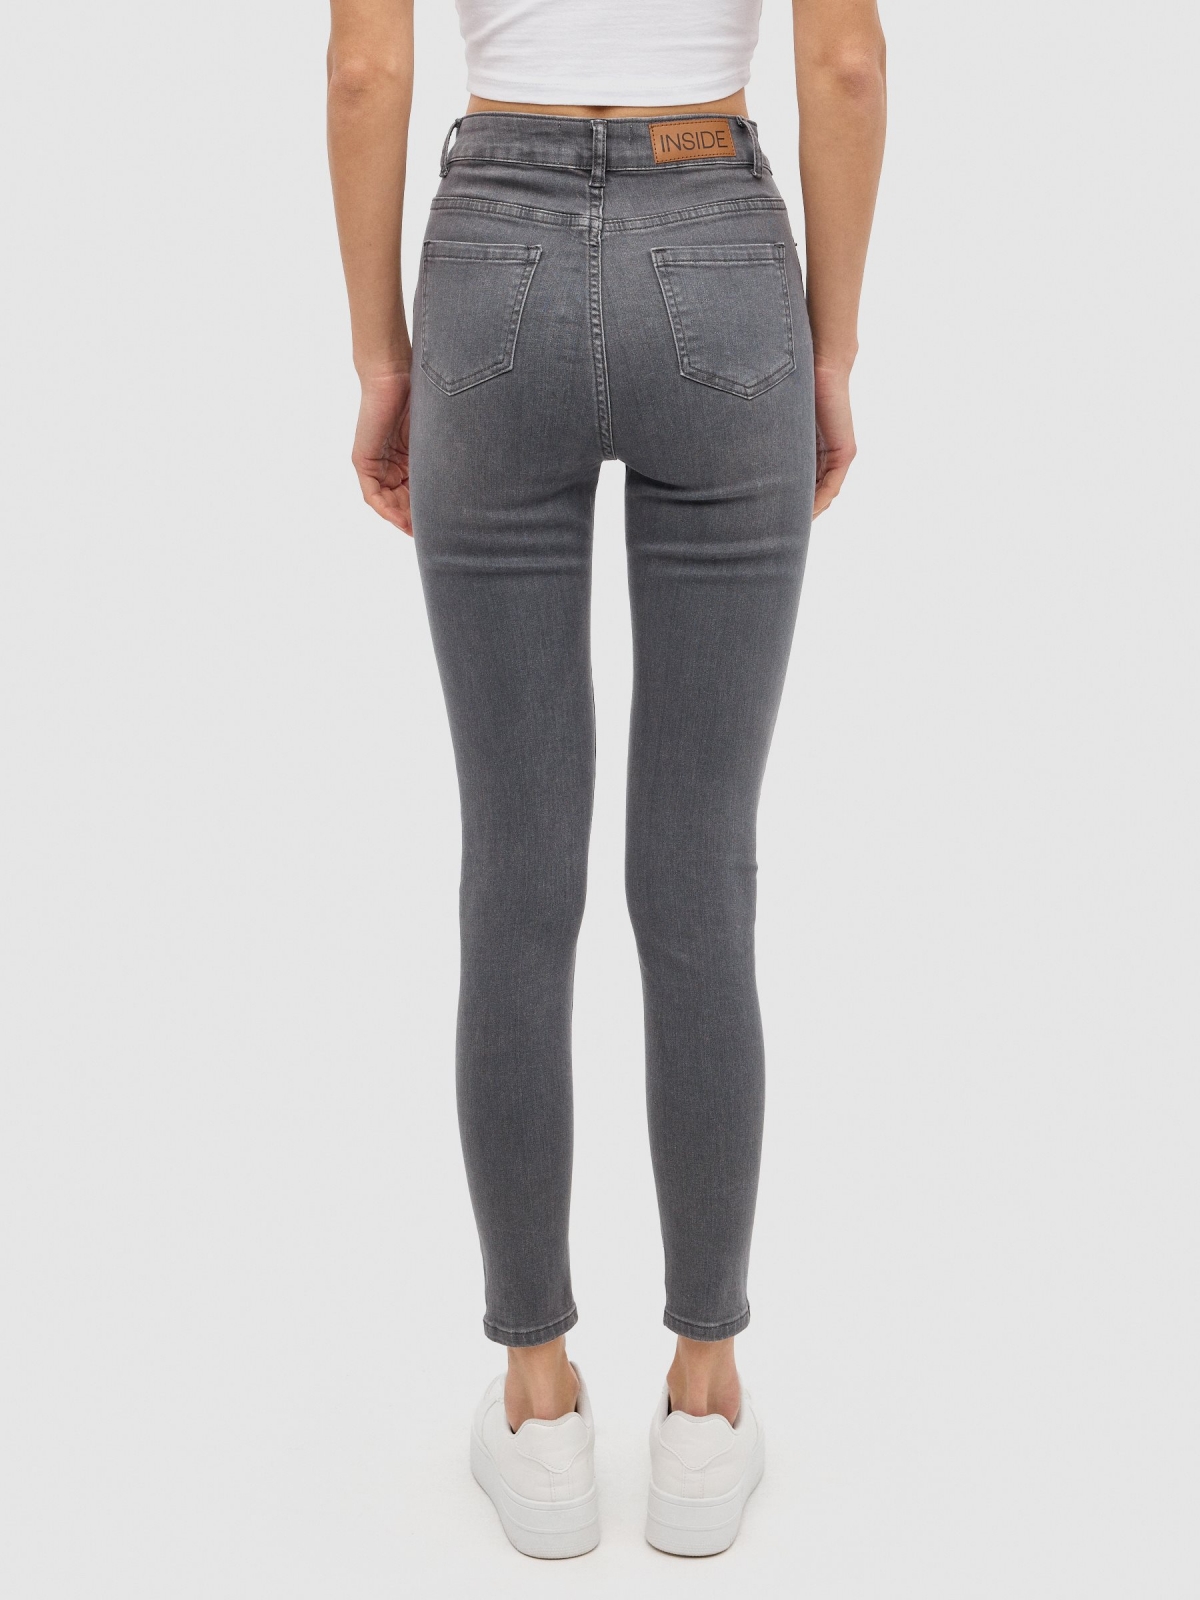 Jeans tiro medio gris desgastados gris claro vista media trasera